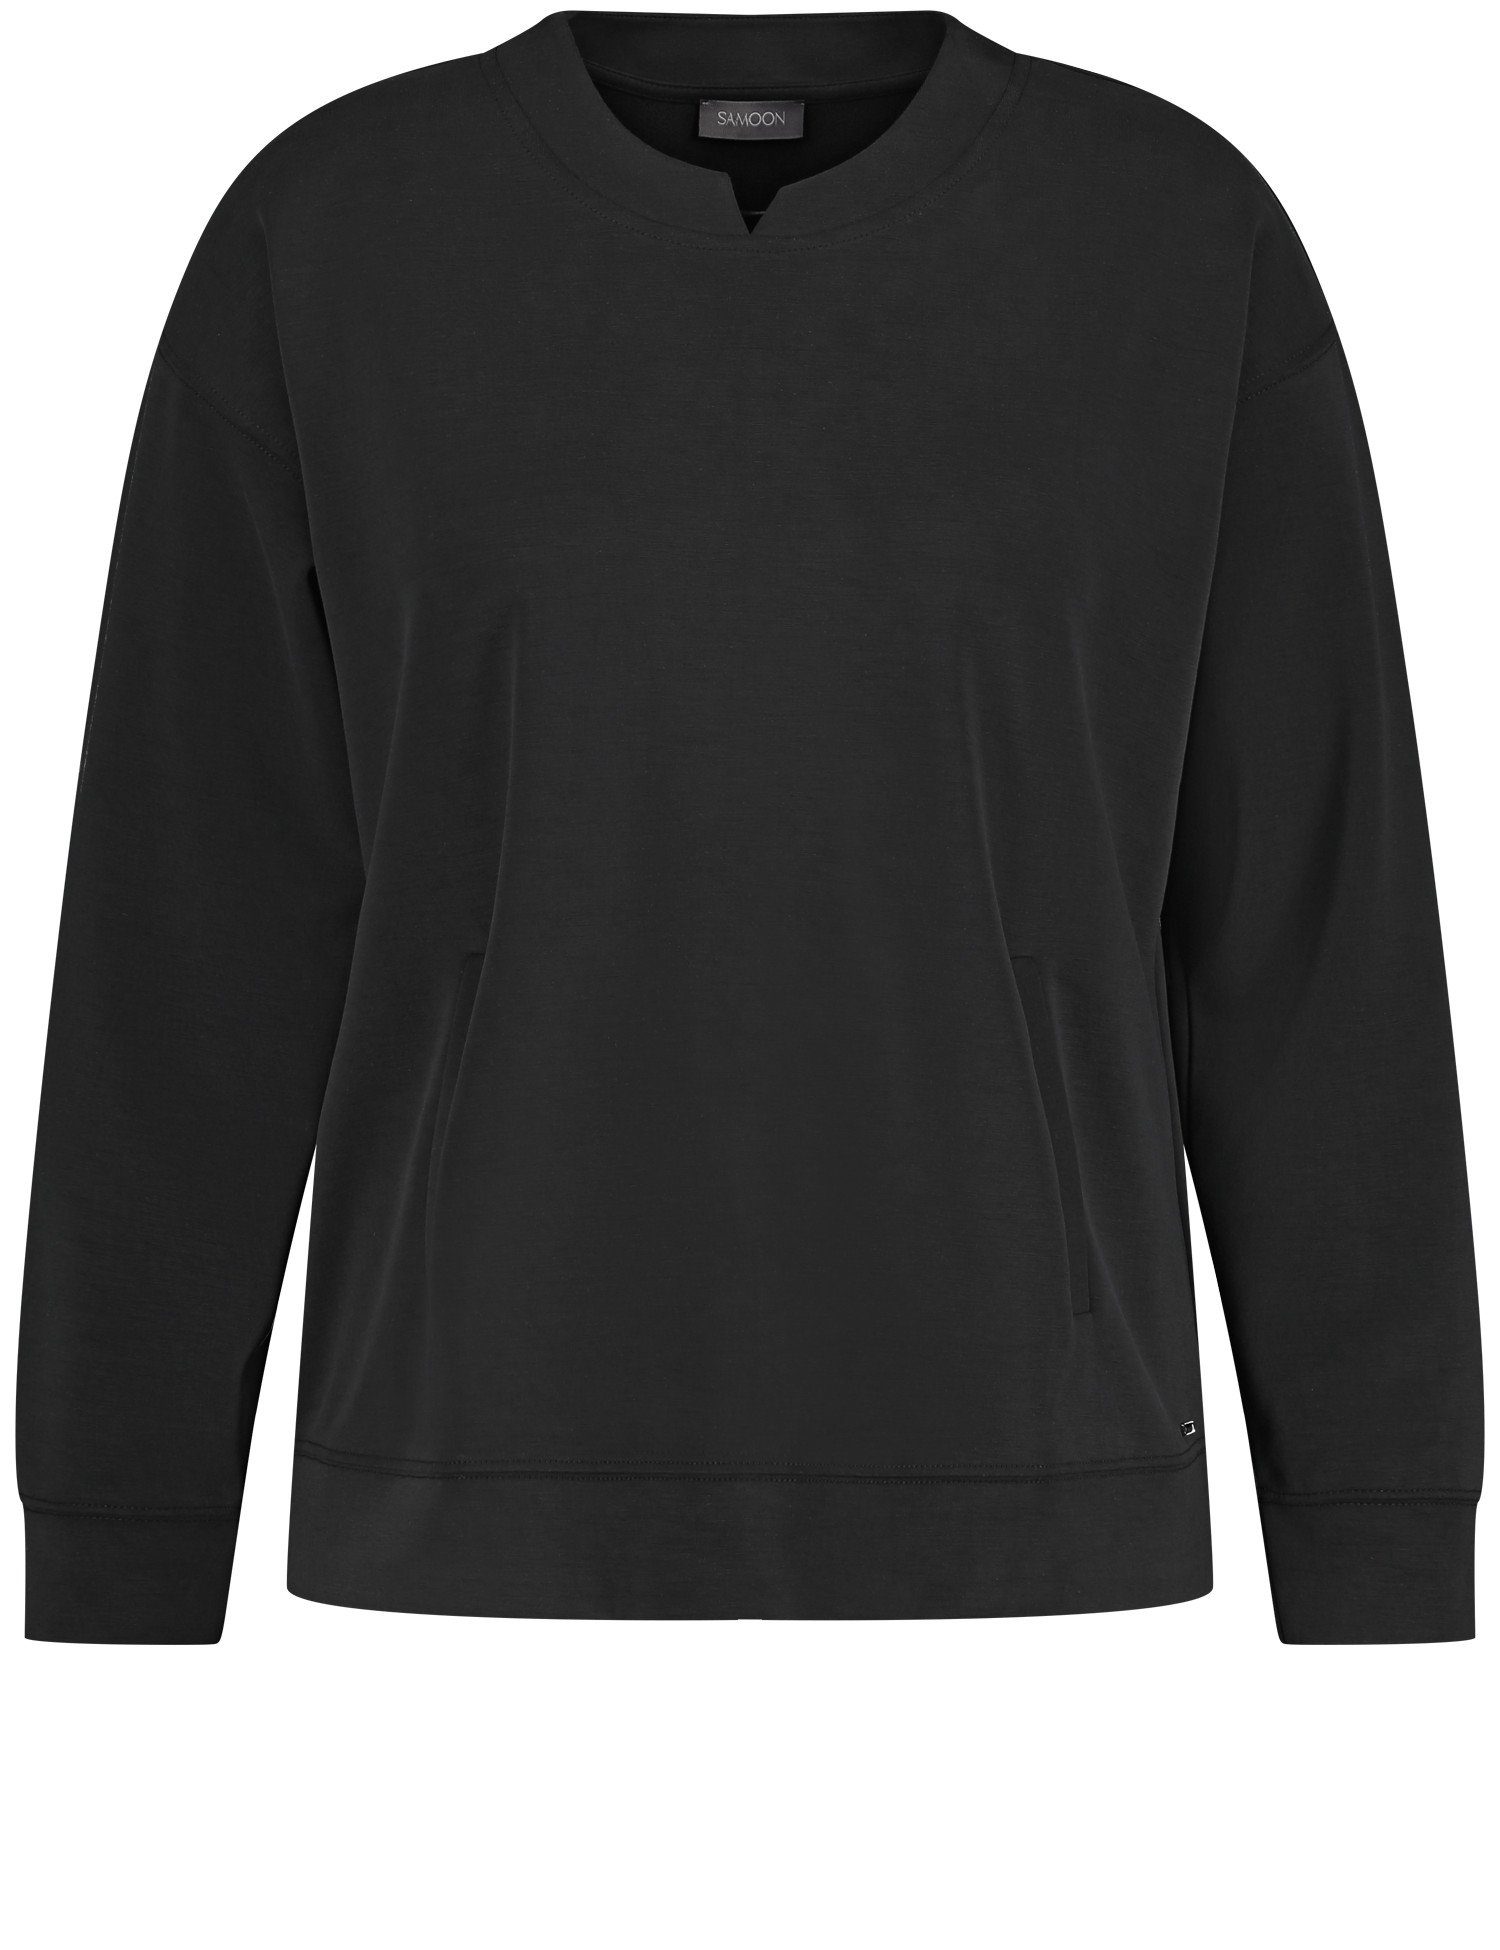 GERRY WEBER Samoon Sweatshirt Sweatshirt Black